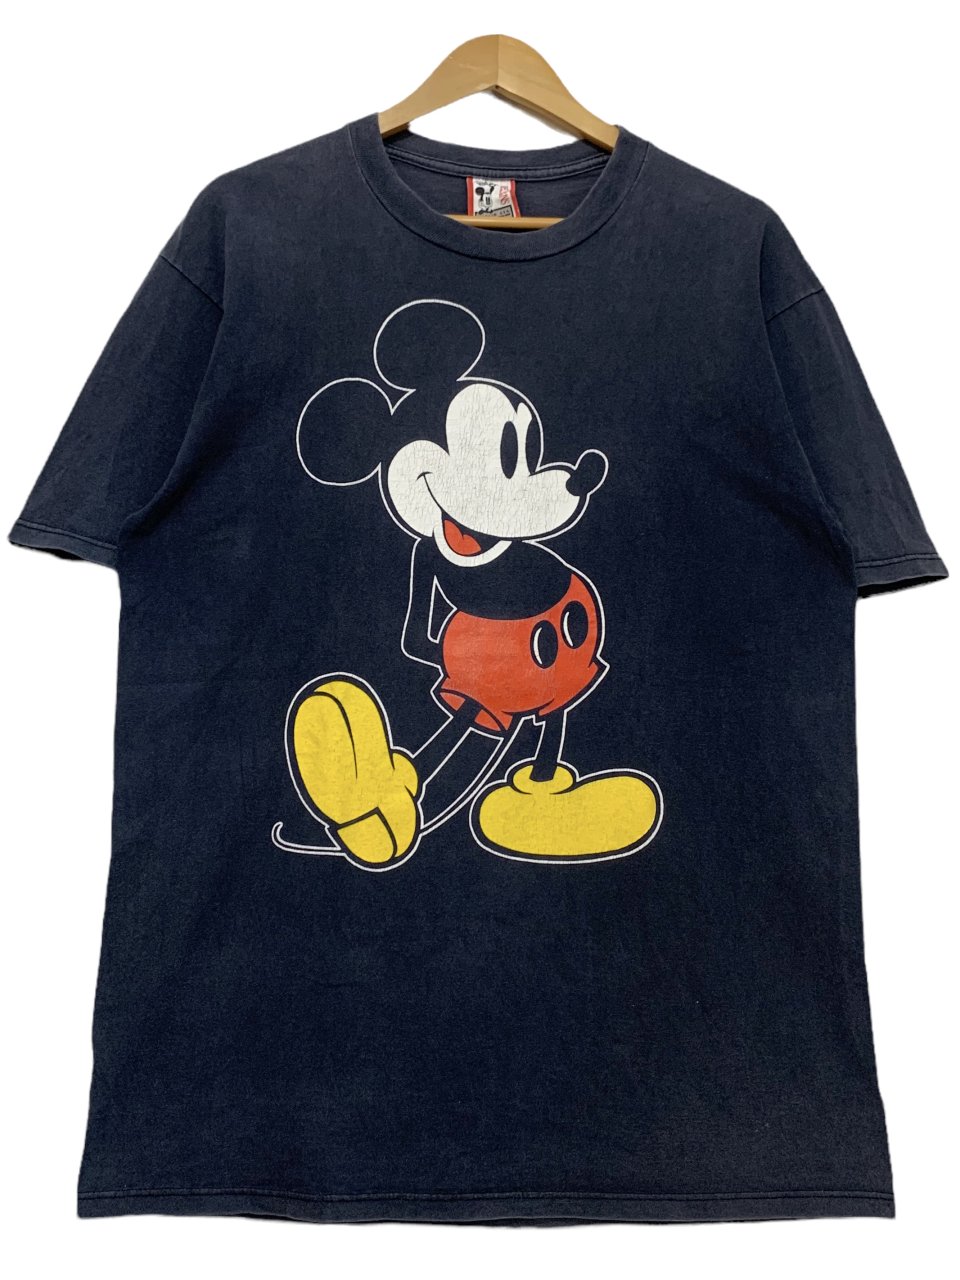 USA製 s Disney "Mickey Mouse" Print S/S Tee 黒 L ディズニー ミッキーマウス 半袖 Tシャツ プリント  キャラクター ブラック 古着   NEWJOKE ONLINE STORE